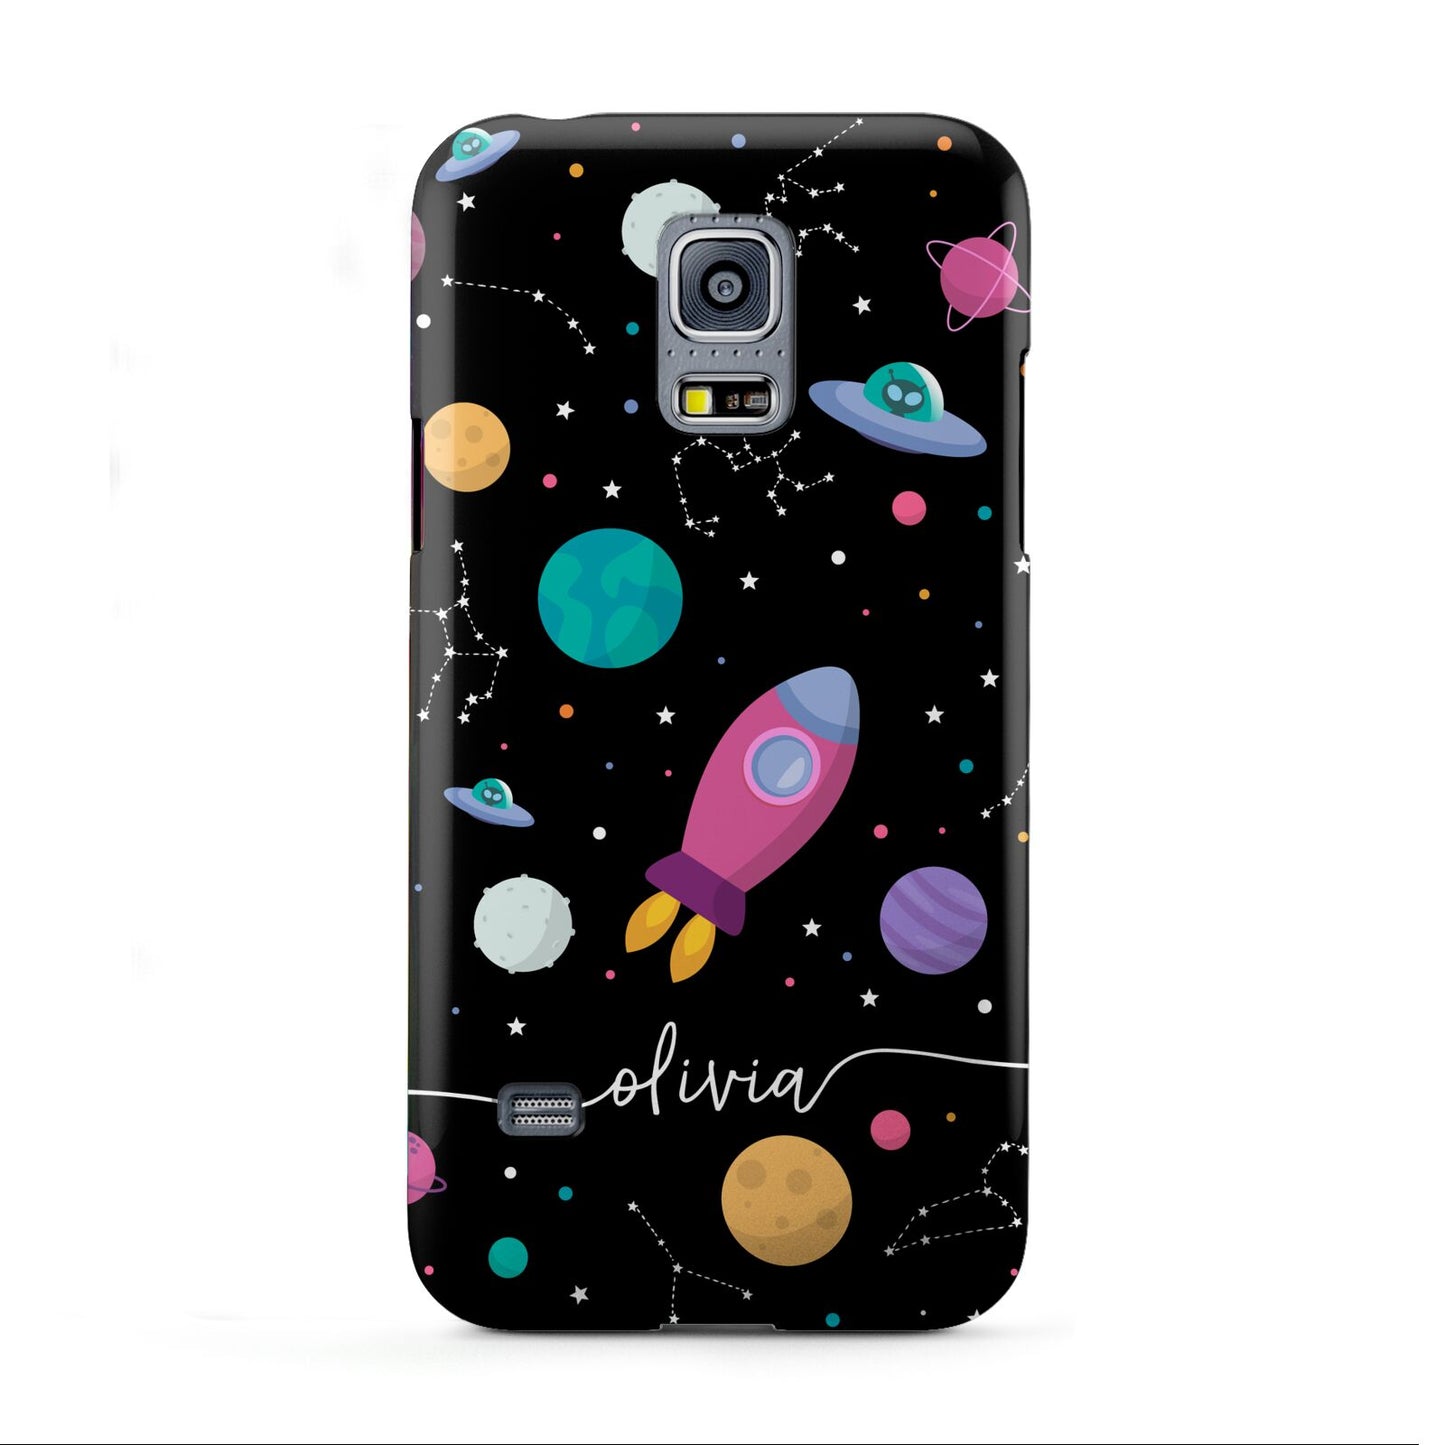 Galaxy Artwork with Name Samsung Galaxy S5 Mini Case